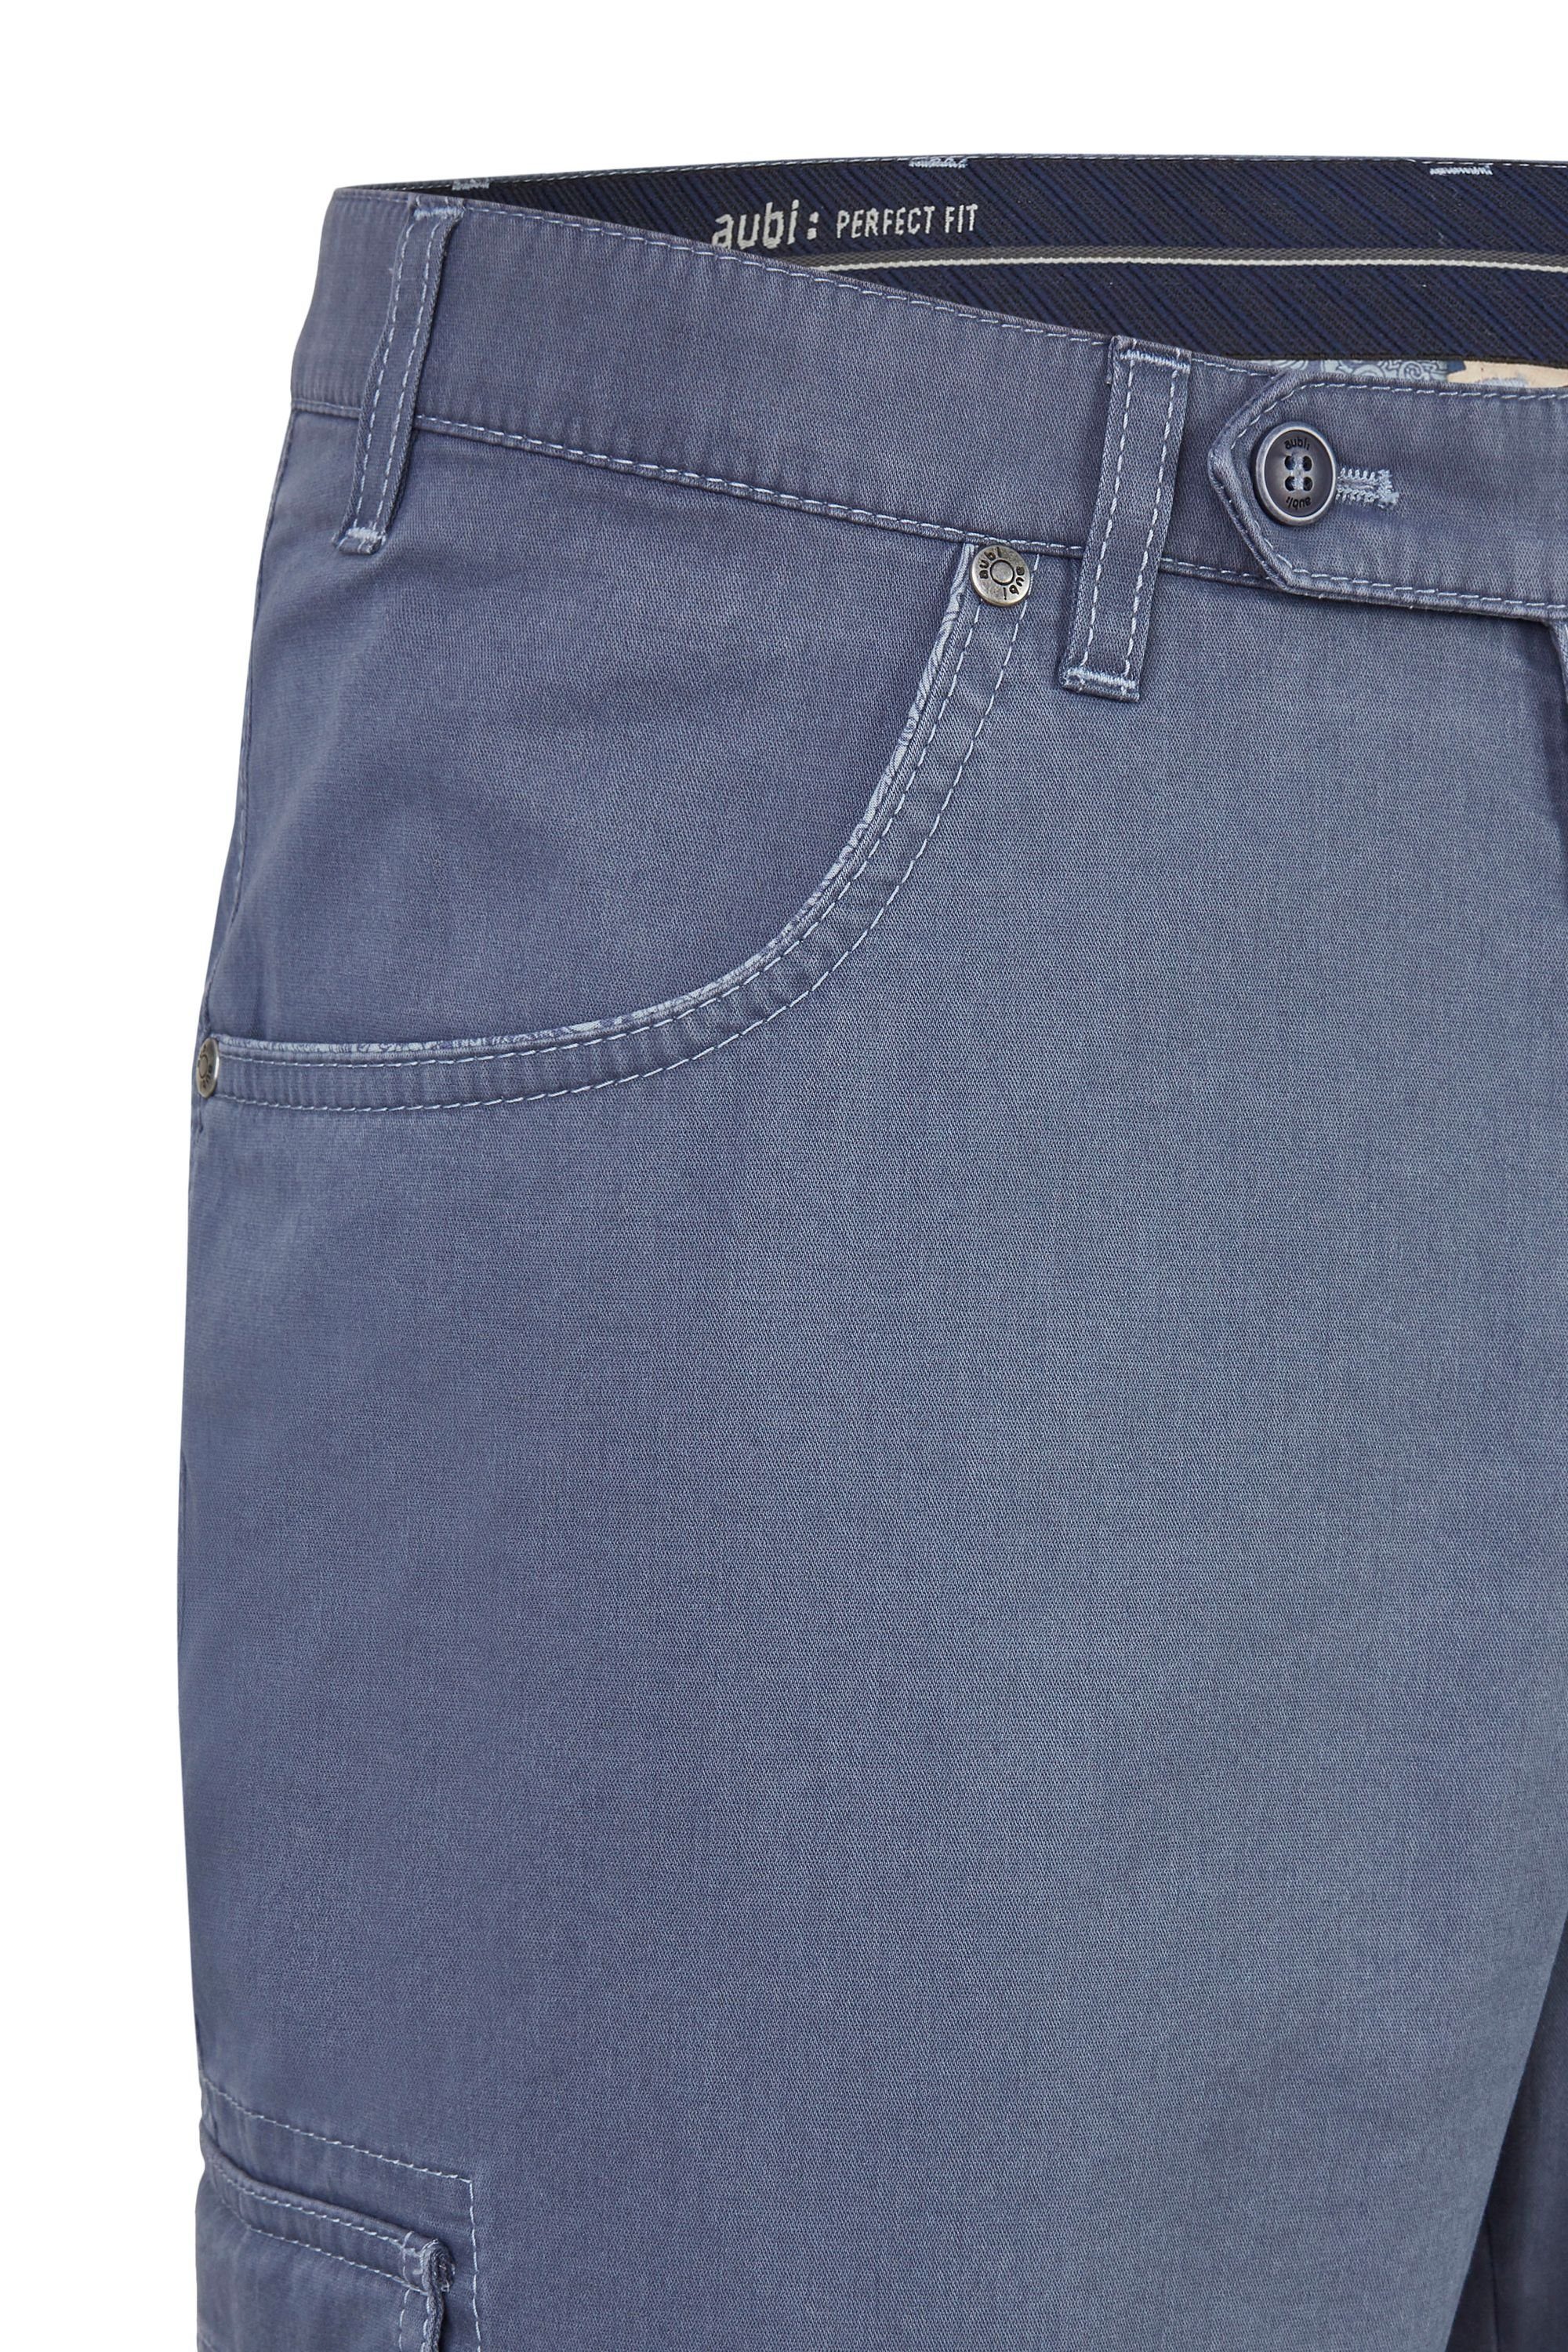 Herren aubi Flex aubi: High Fit 616 Modell Paisley Shorts Perfect blau Stoffhose (44)